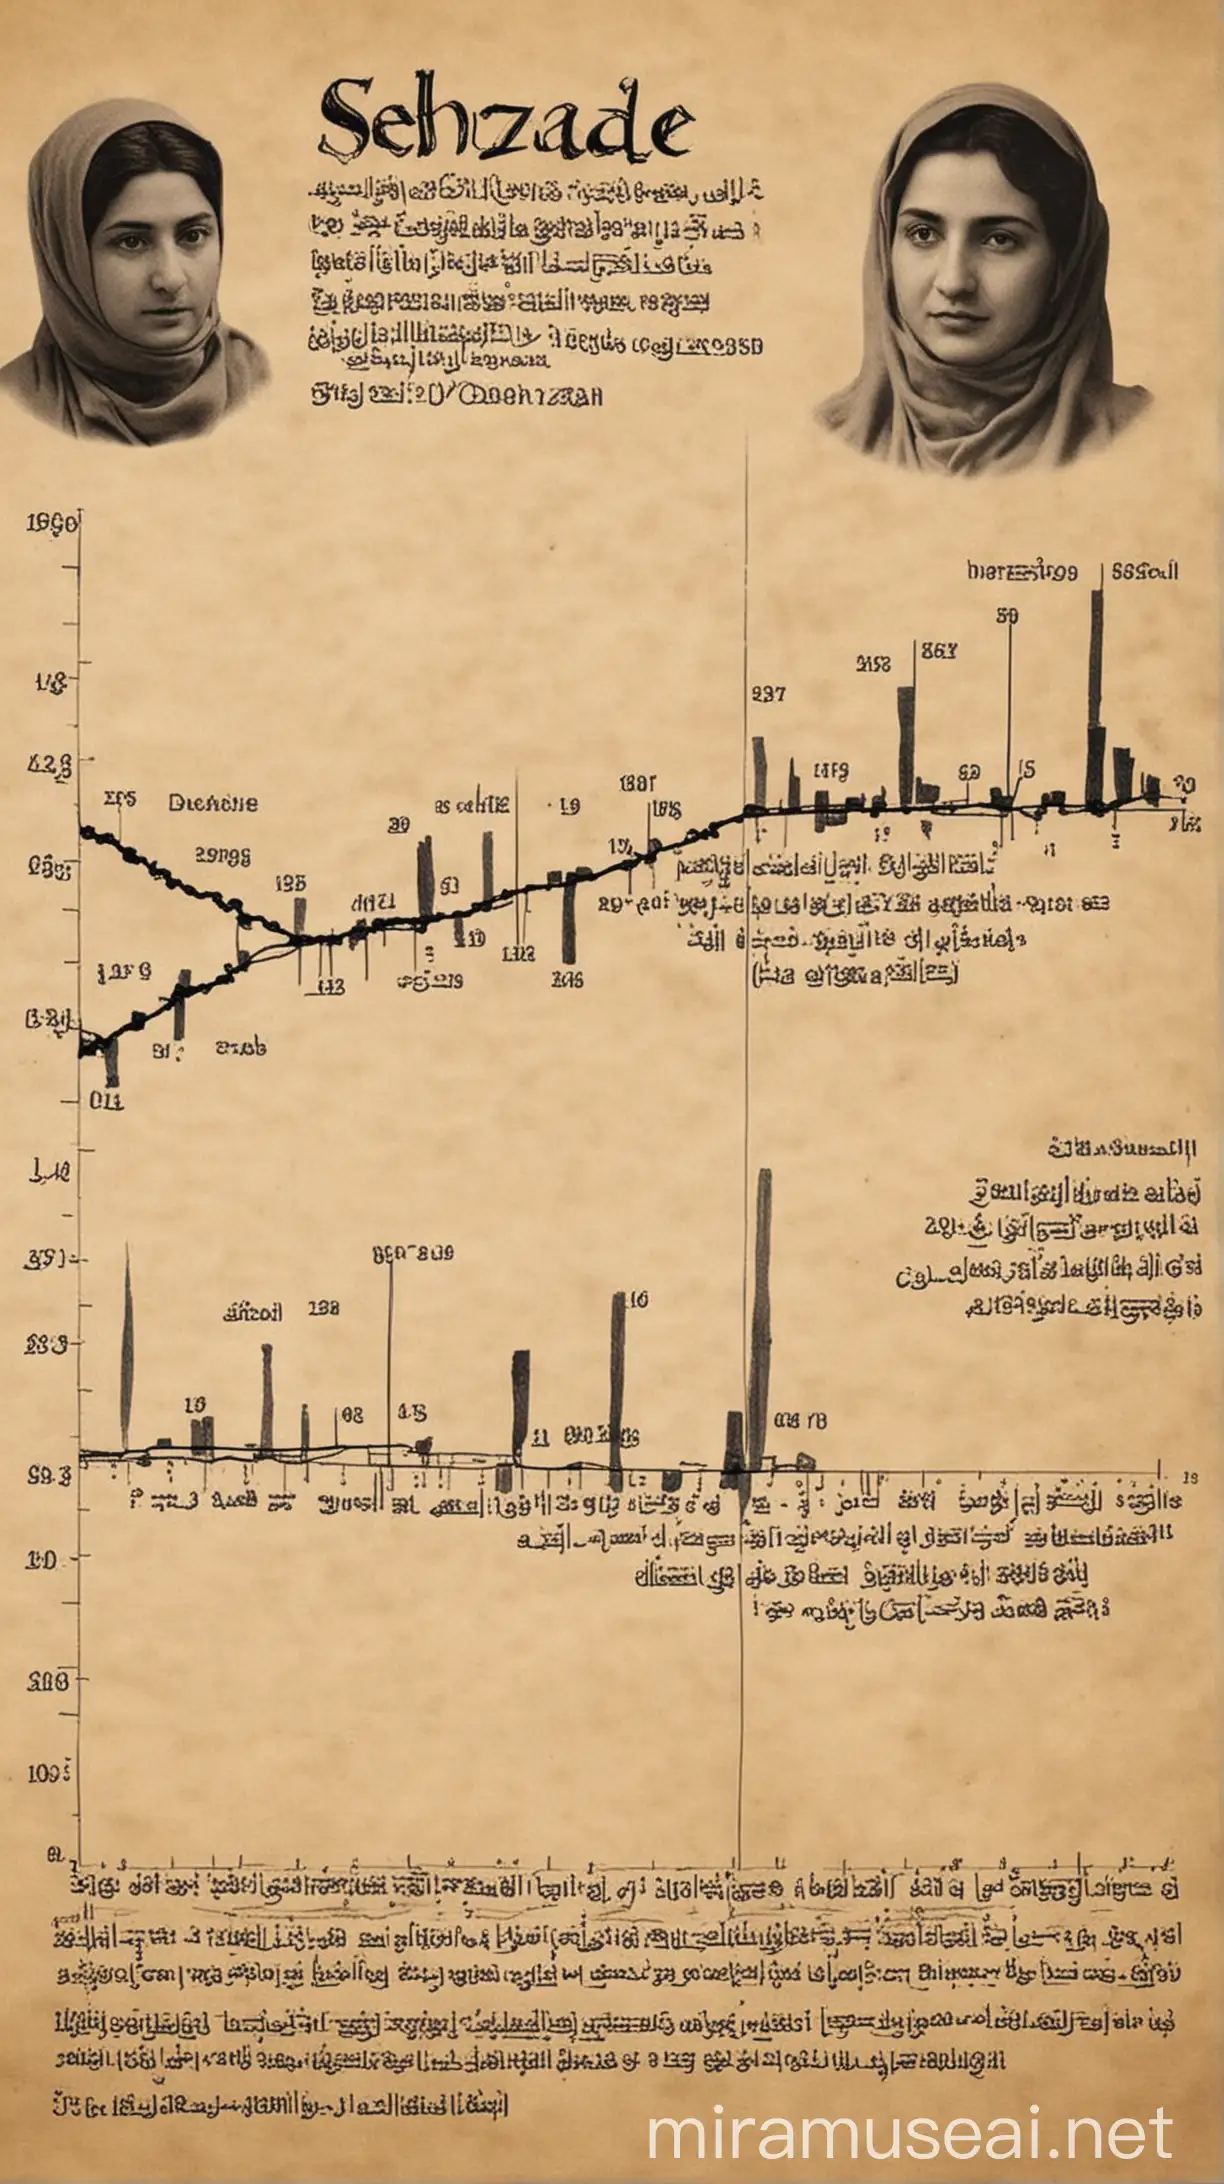 Timeline Graph of ehzade Osmans Captivity Years